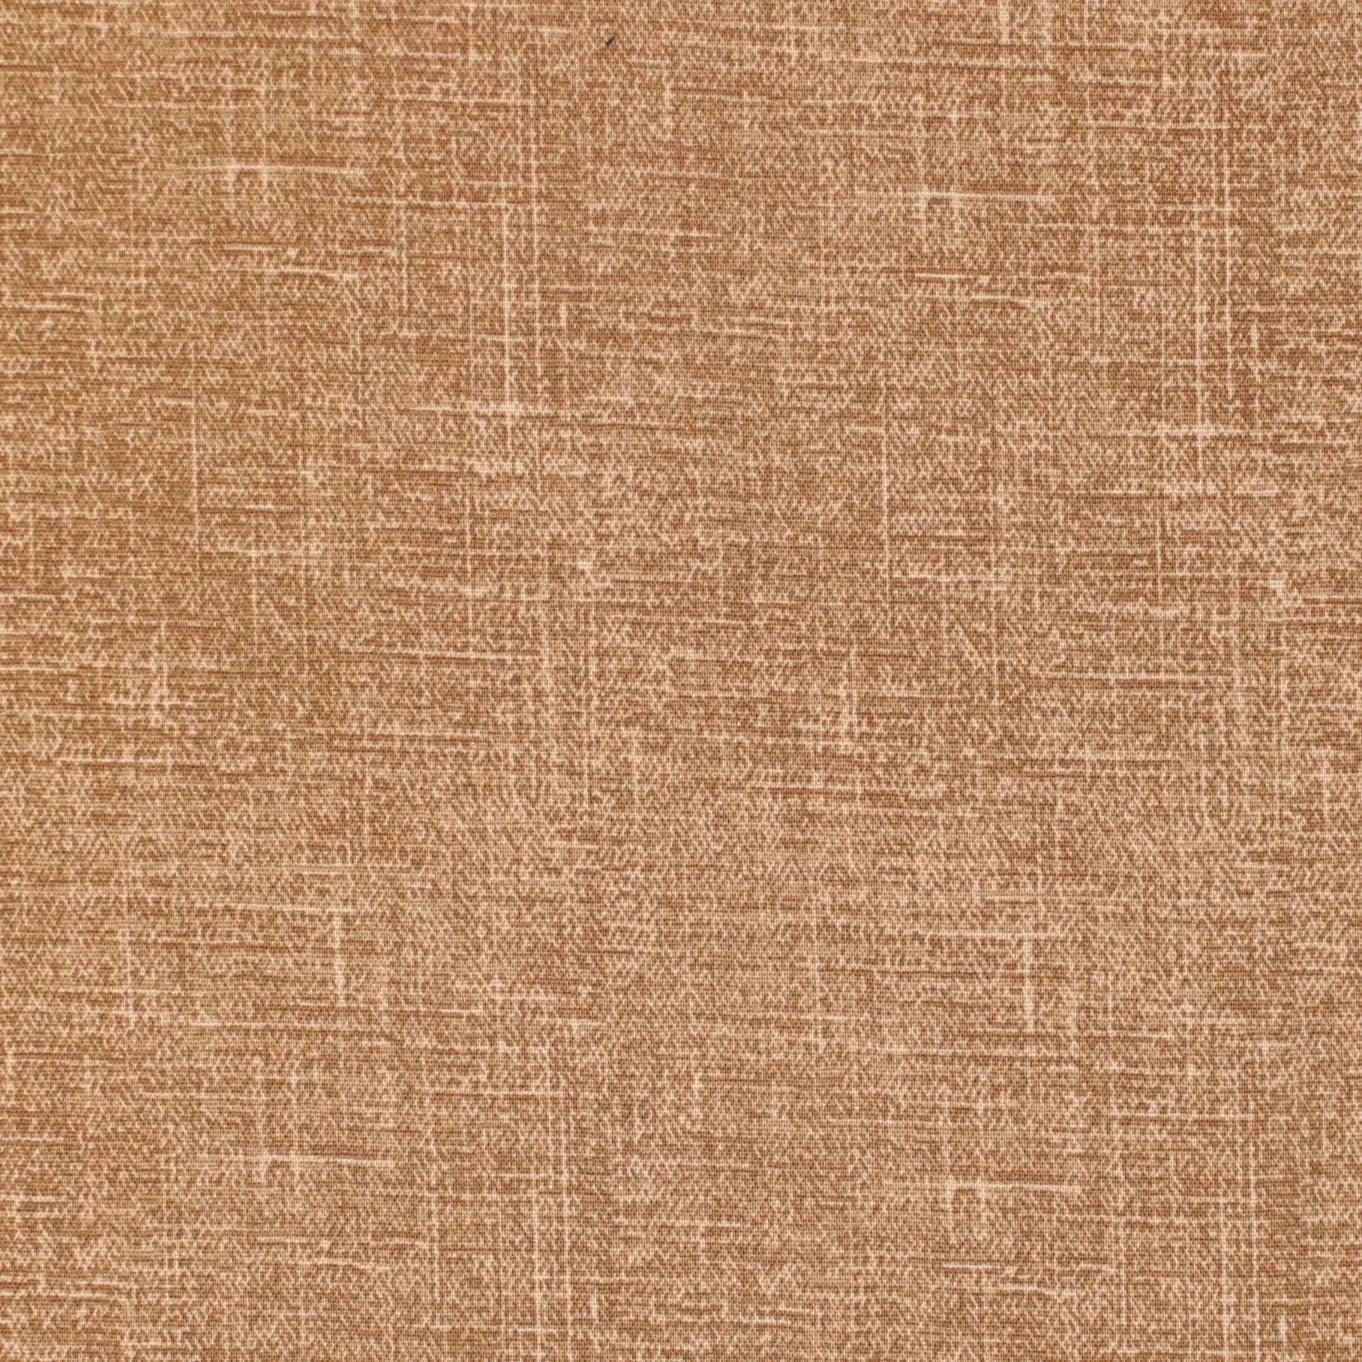 Brown Coffee Grain of Color Cotton Wideback Fabric Per Yard